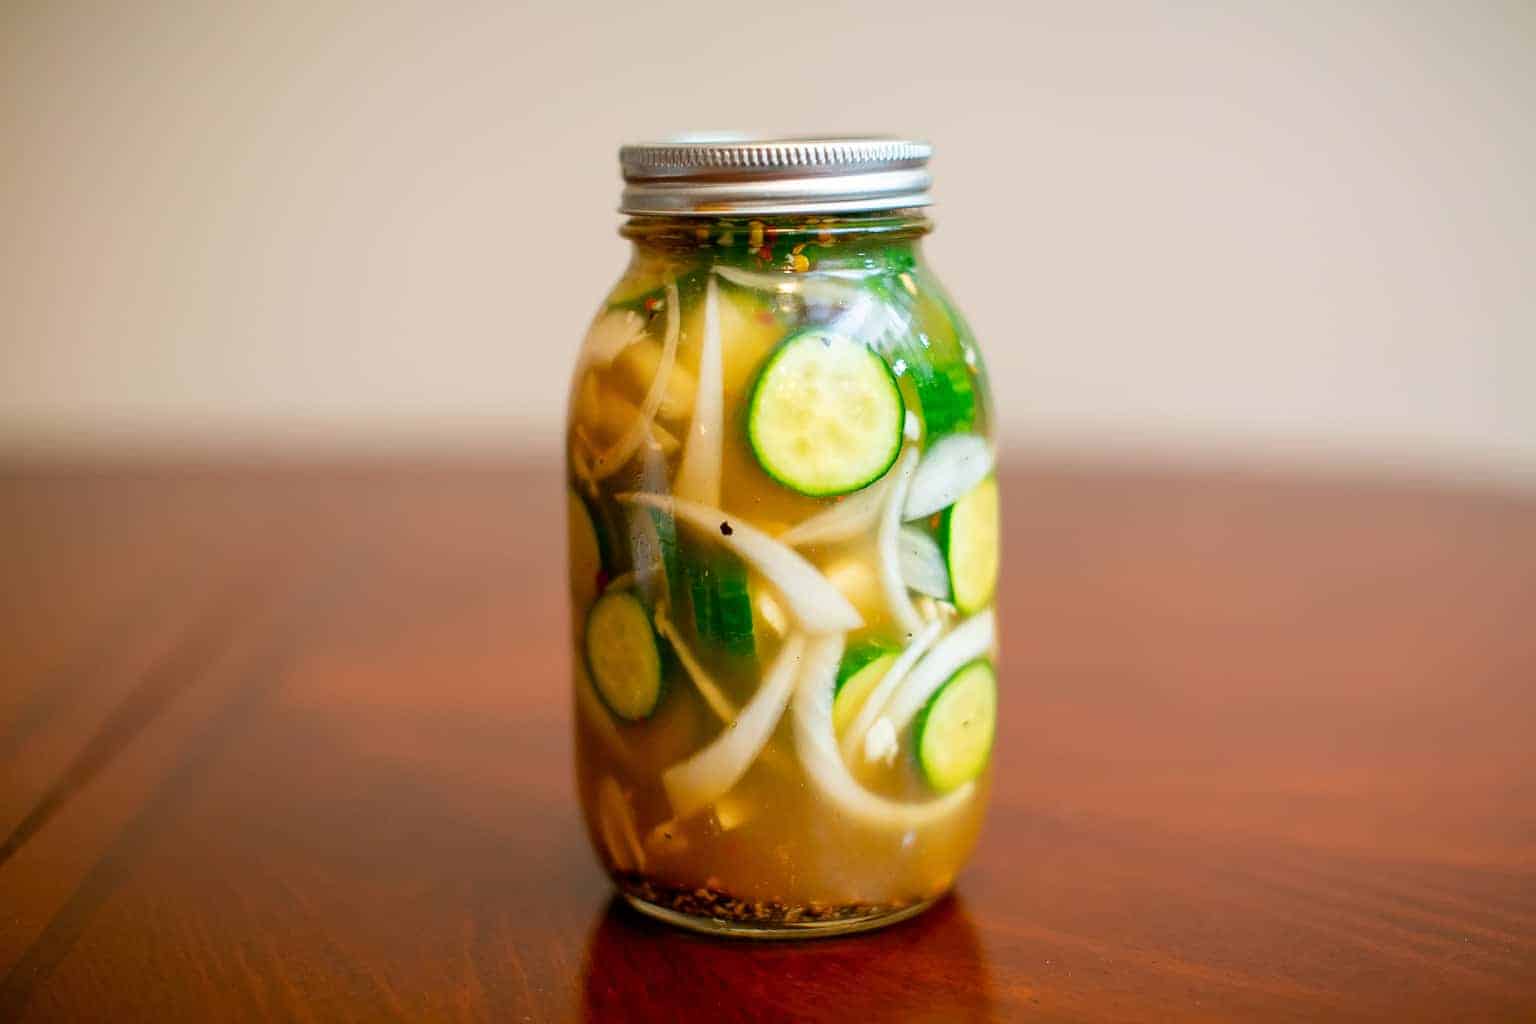 A jar of pickle juice